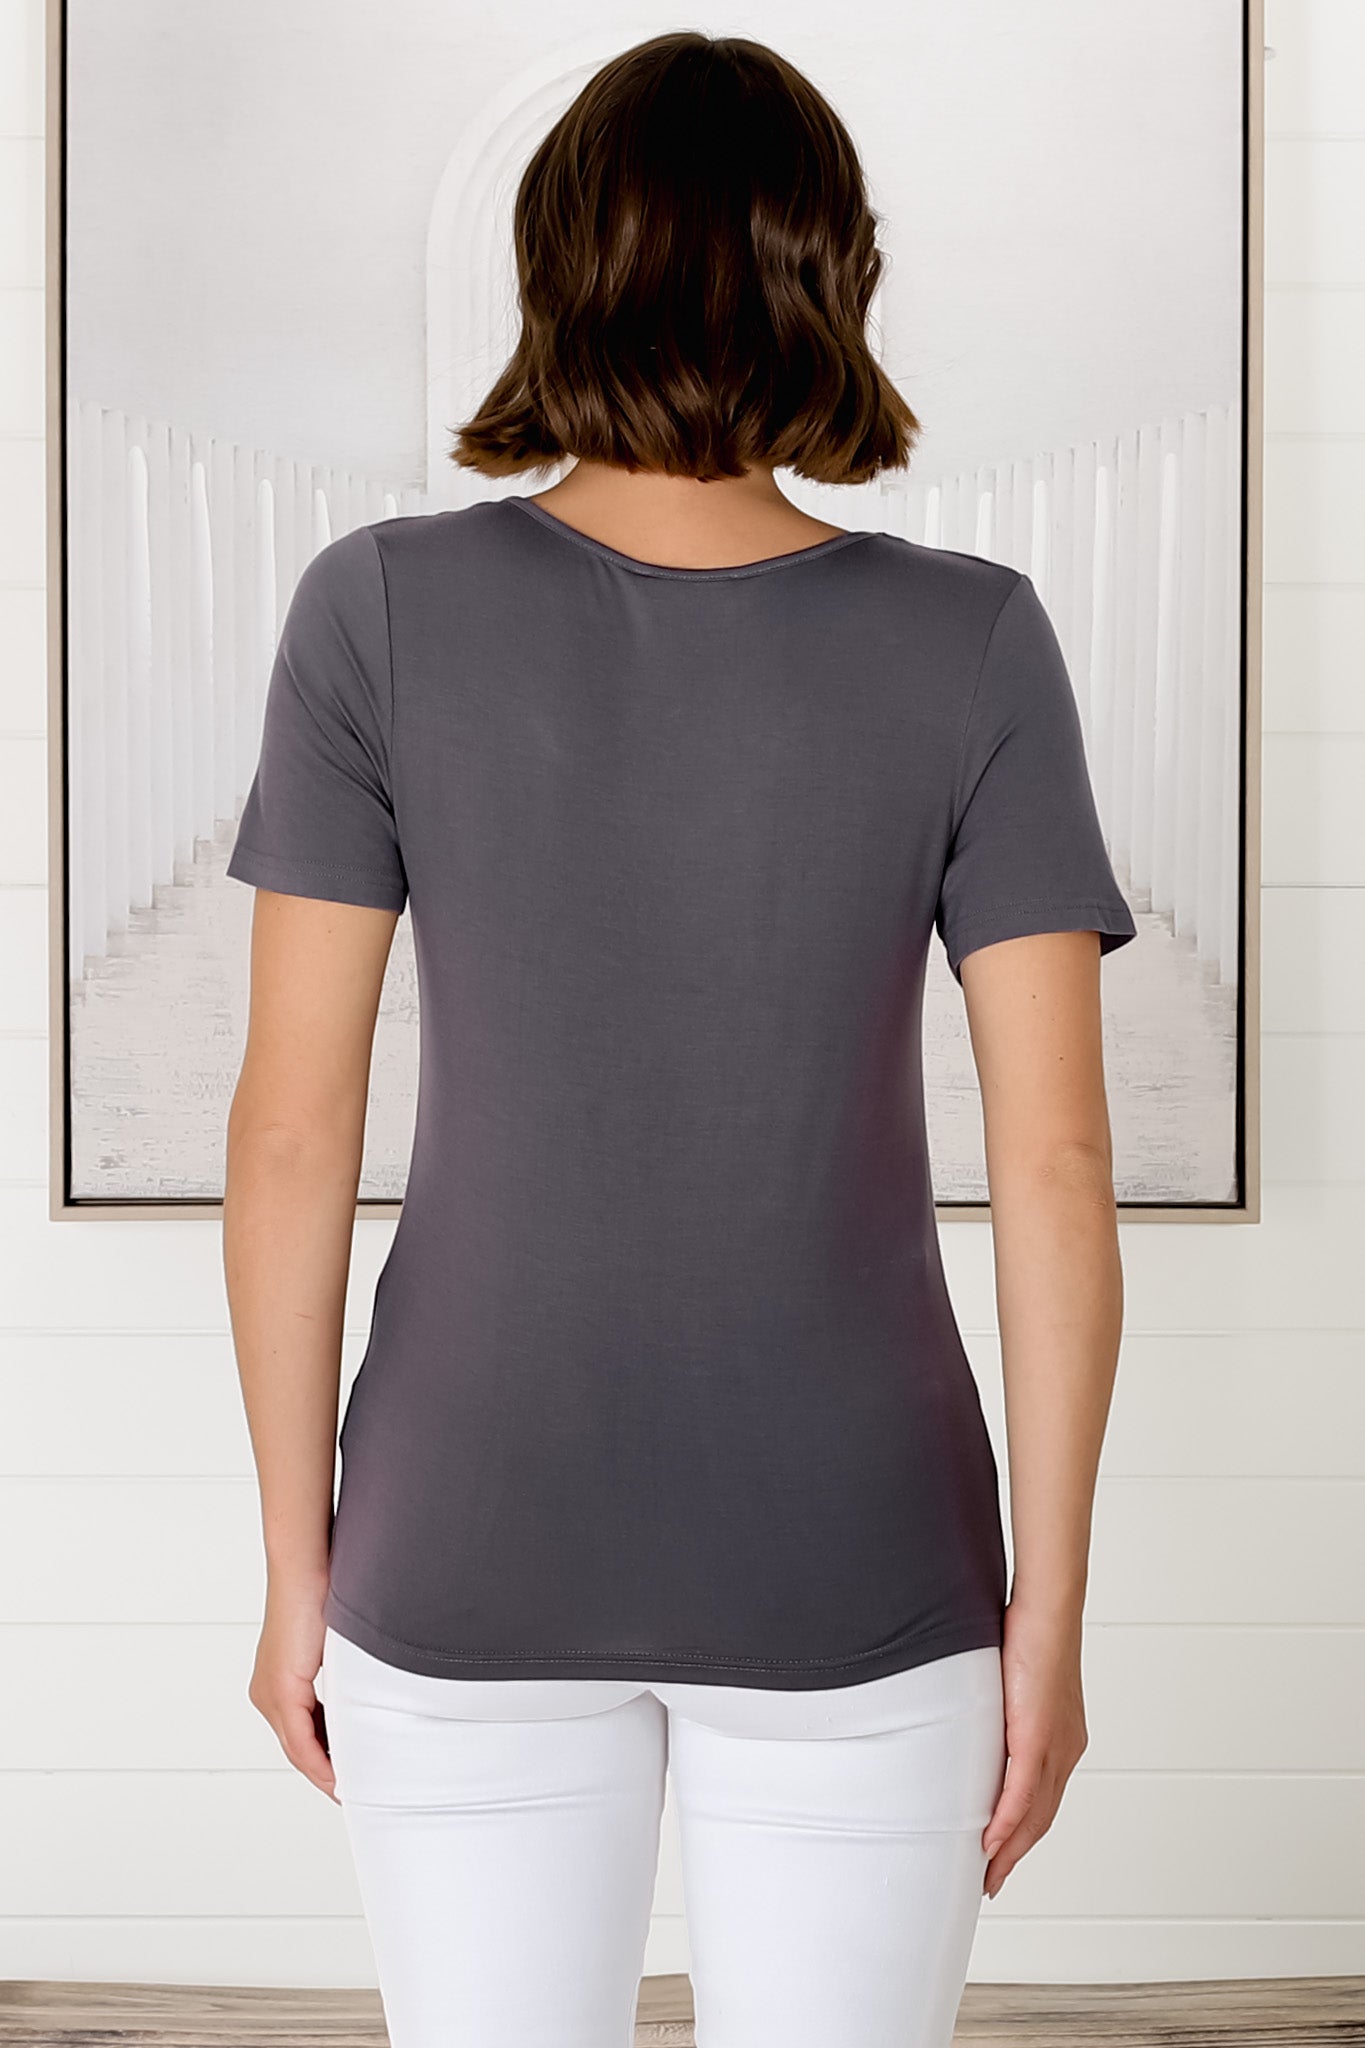 Mia T-Shirt - Soft V Neck Stretchy Tee in Grey